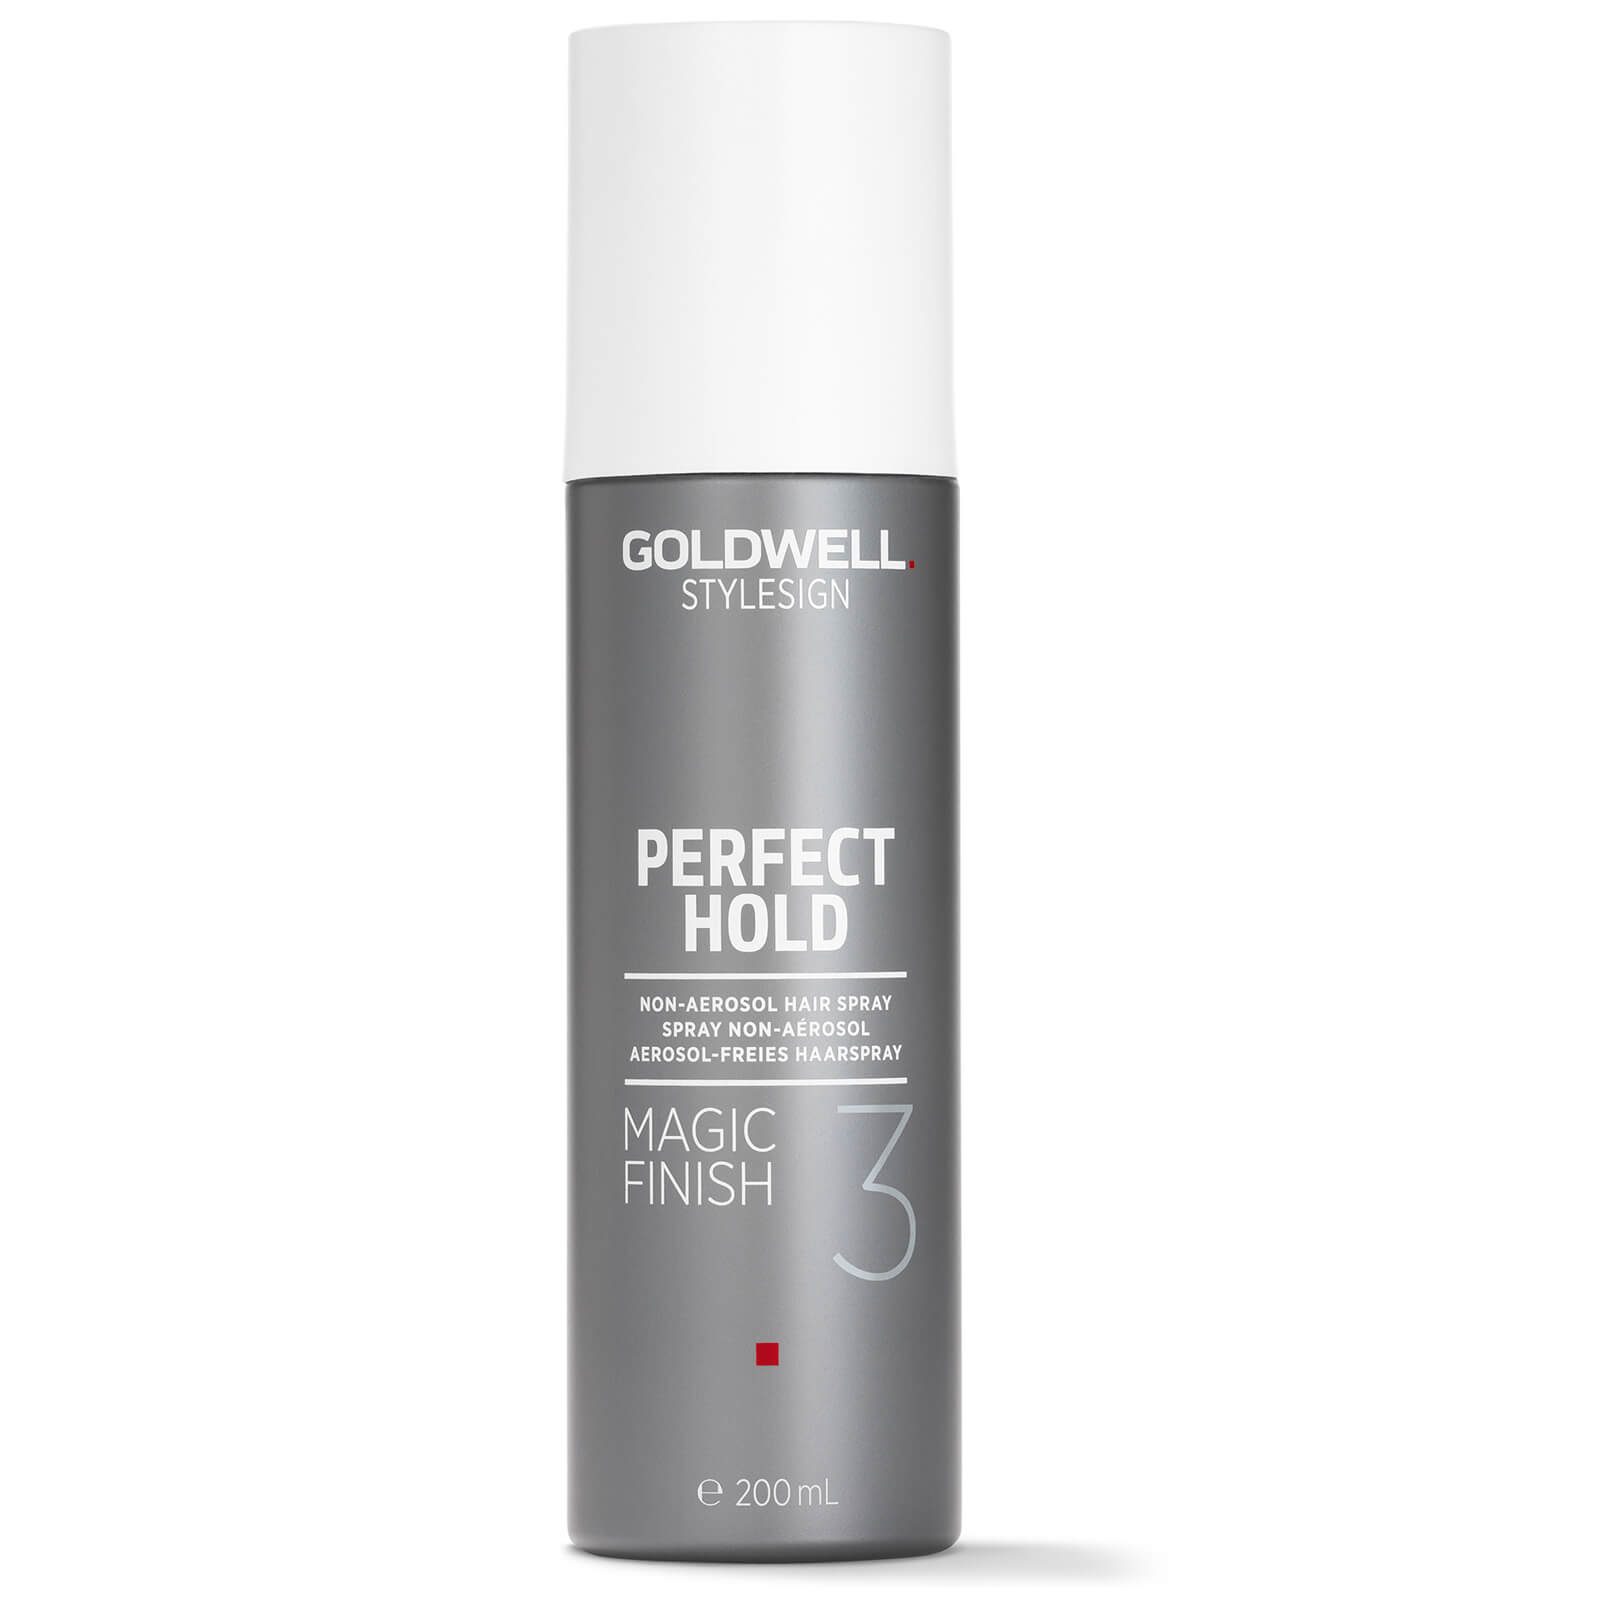 Goldwell StyleSign Perfect Hold Non-Aerosol Magic Finish Hair Spray 200ml lookfantastic.com imagine